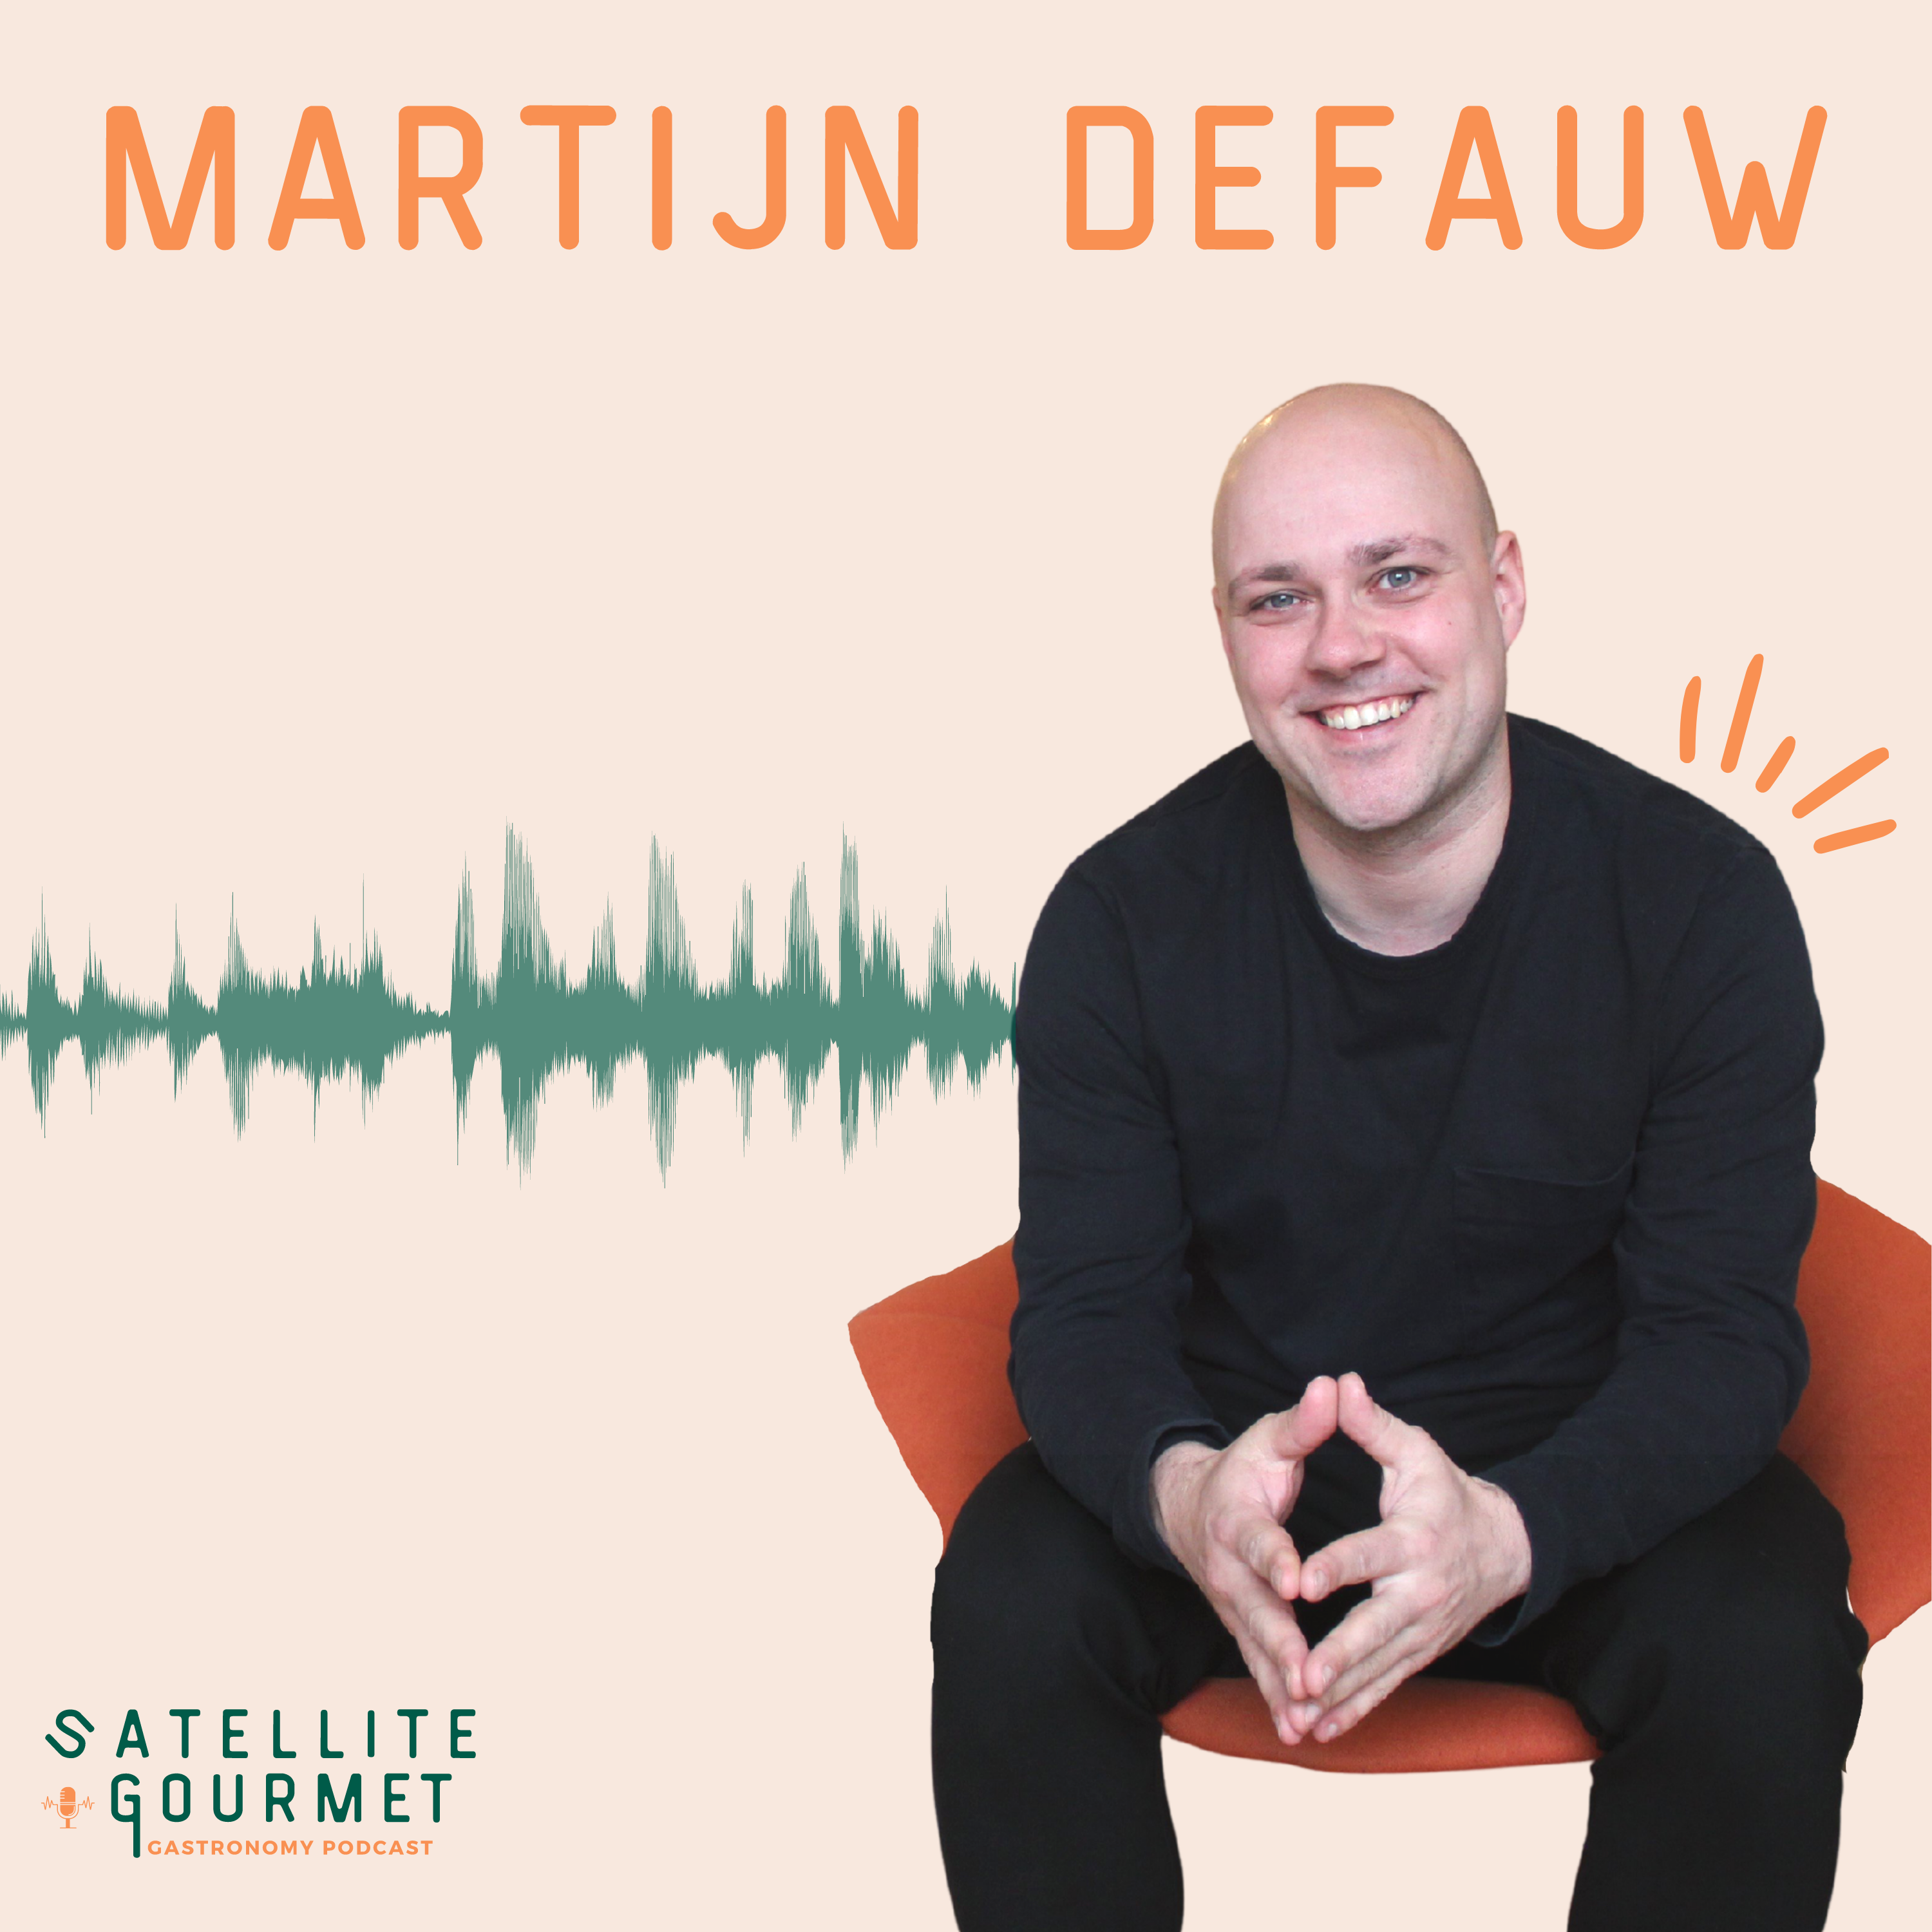 Martijn Defauw